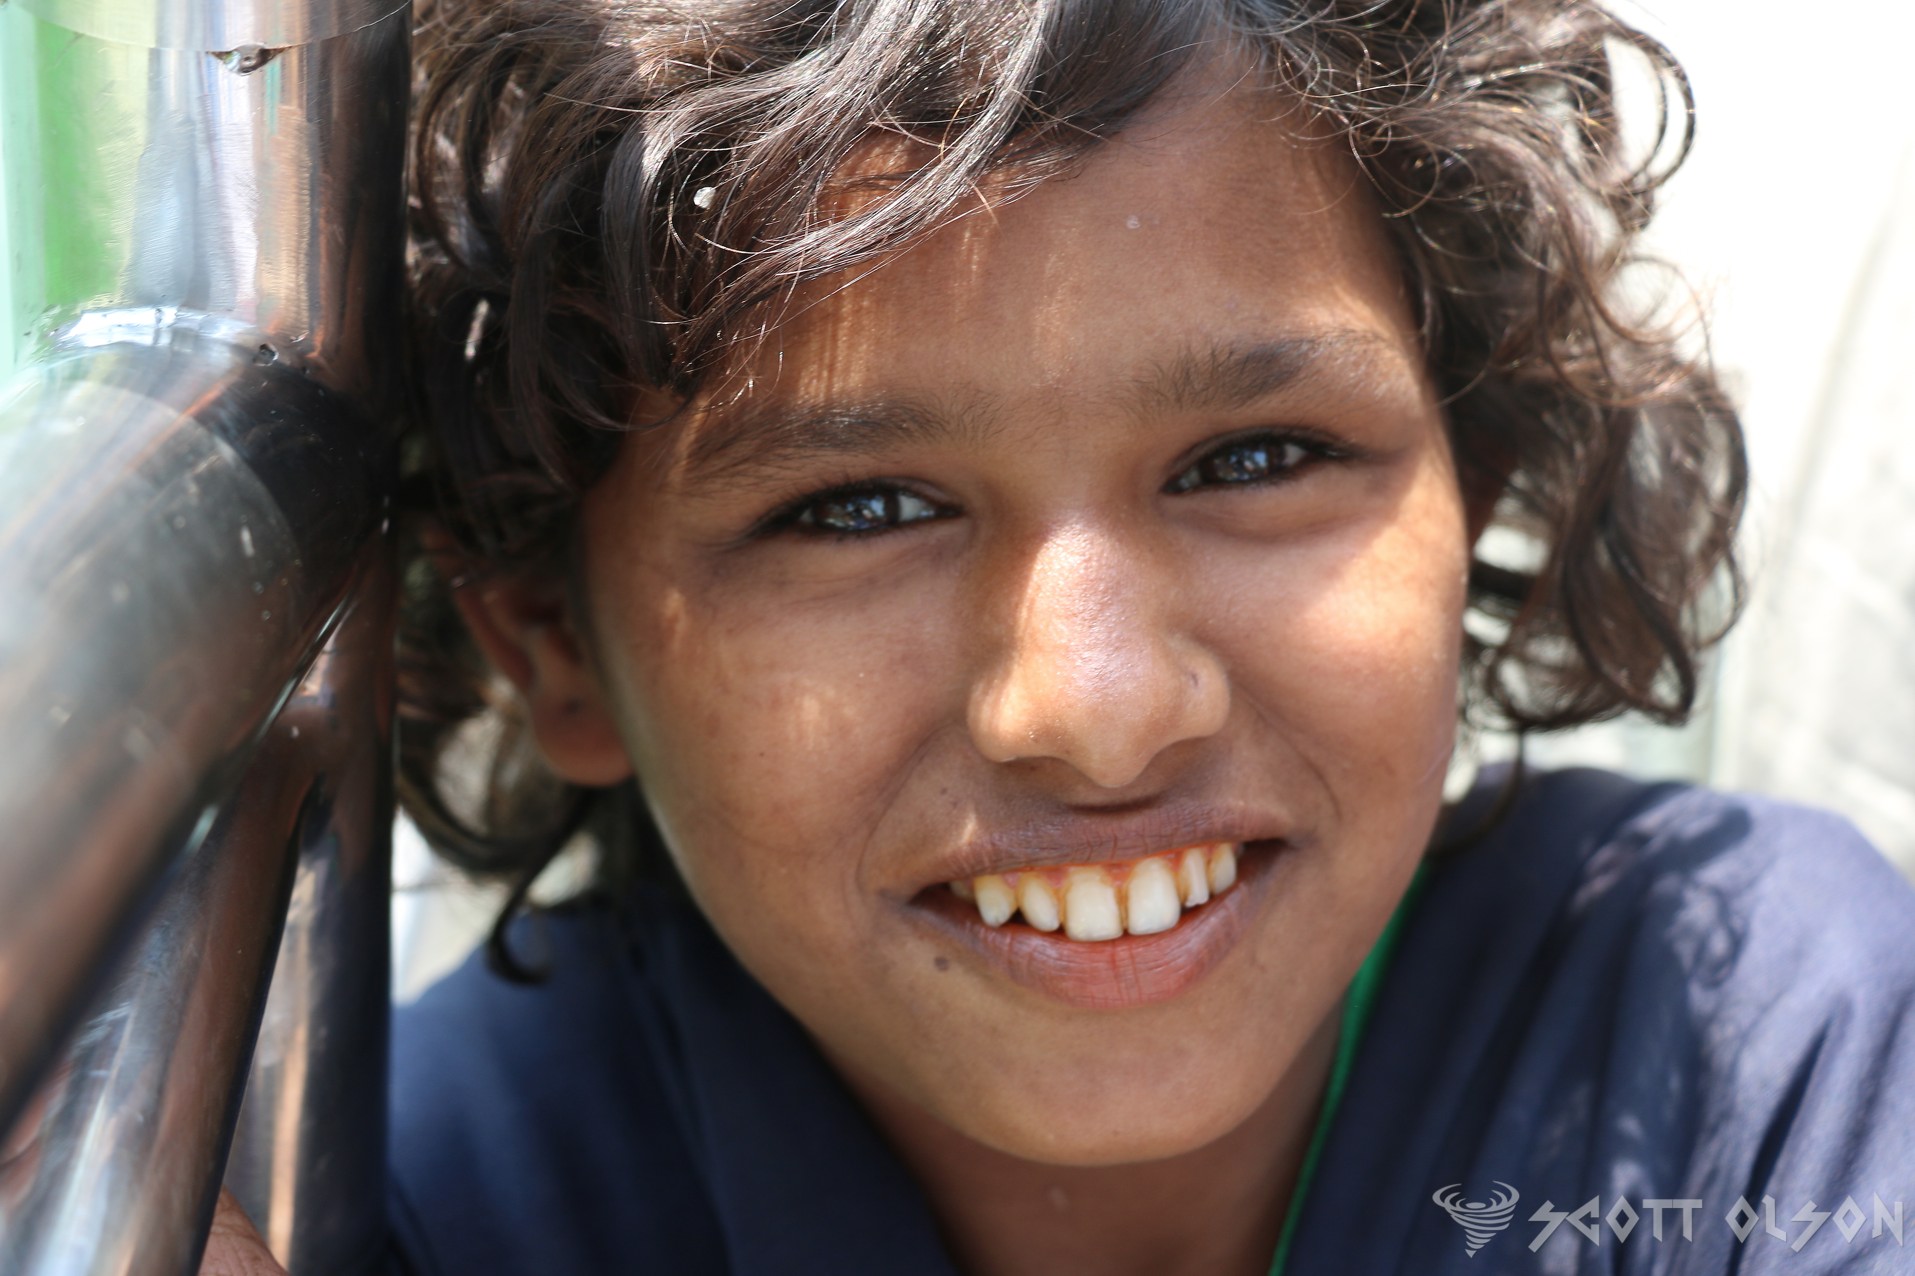 beautiful-children-smiling-india-bangladesh